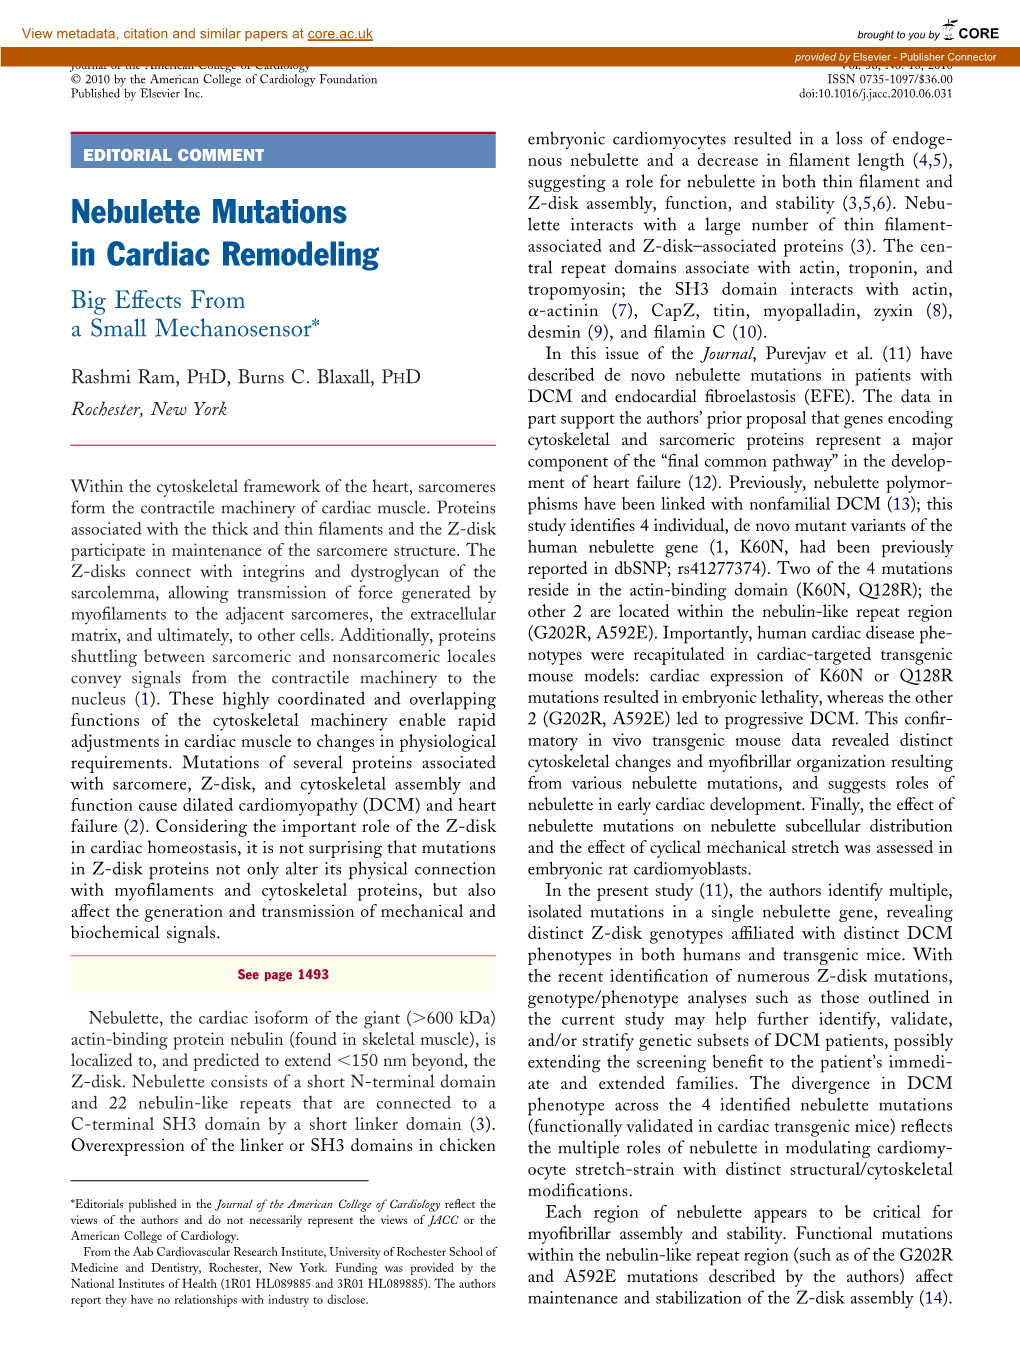 Nebulette Mutations in Cardiac Remodeling